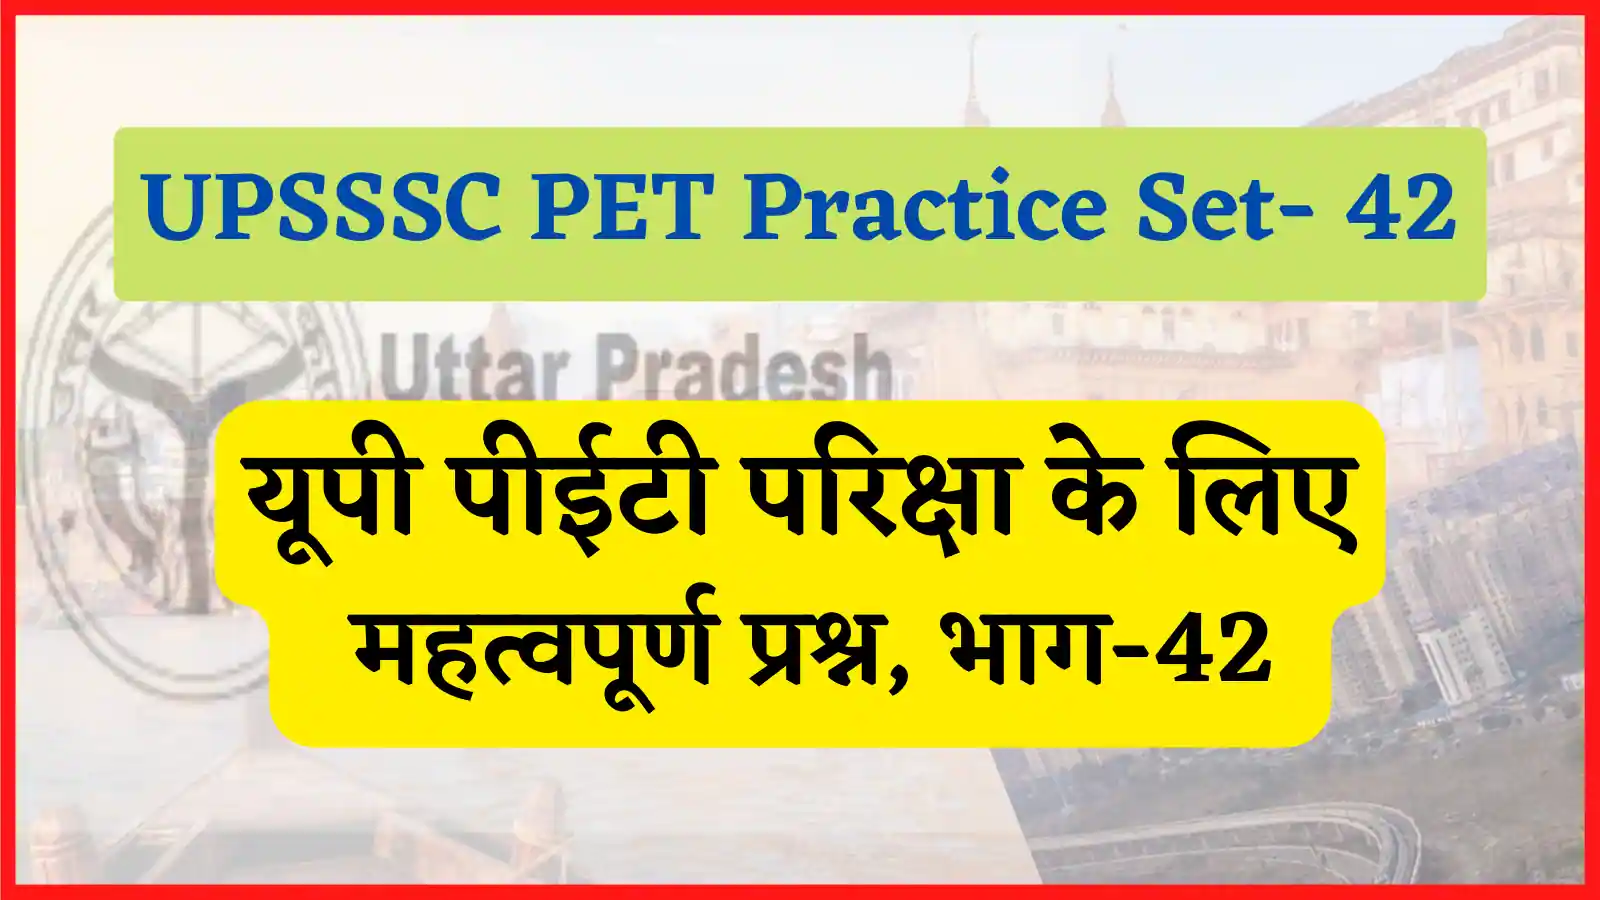 UPSSSC PET Practice Set-42